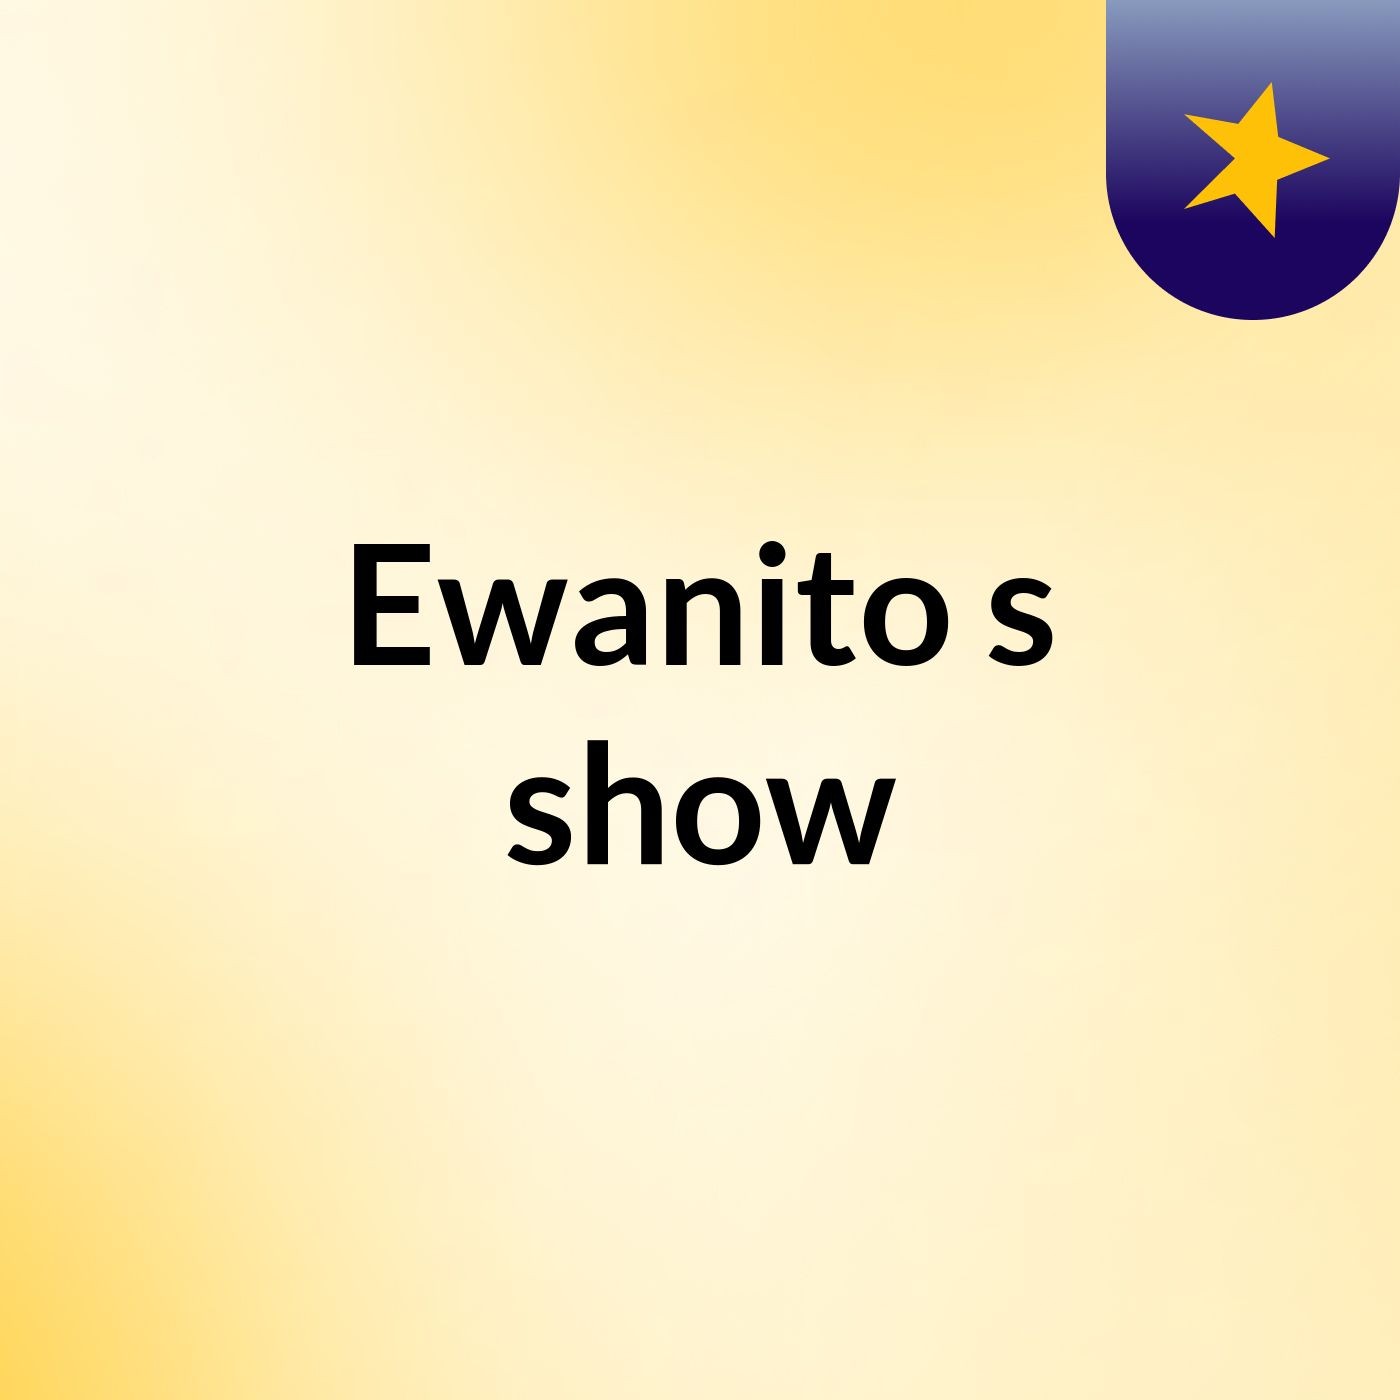 Ewanito's show